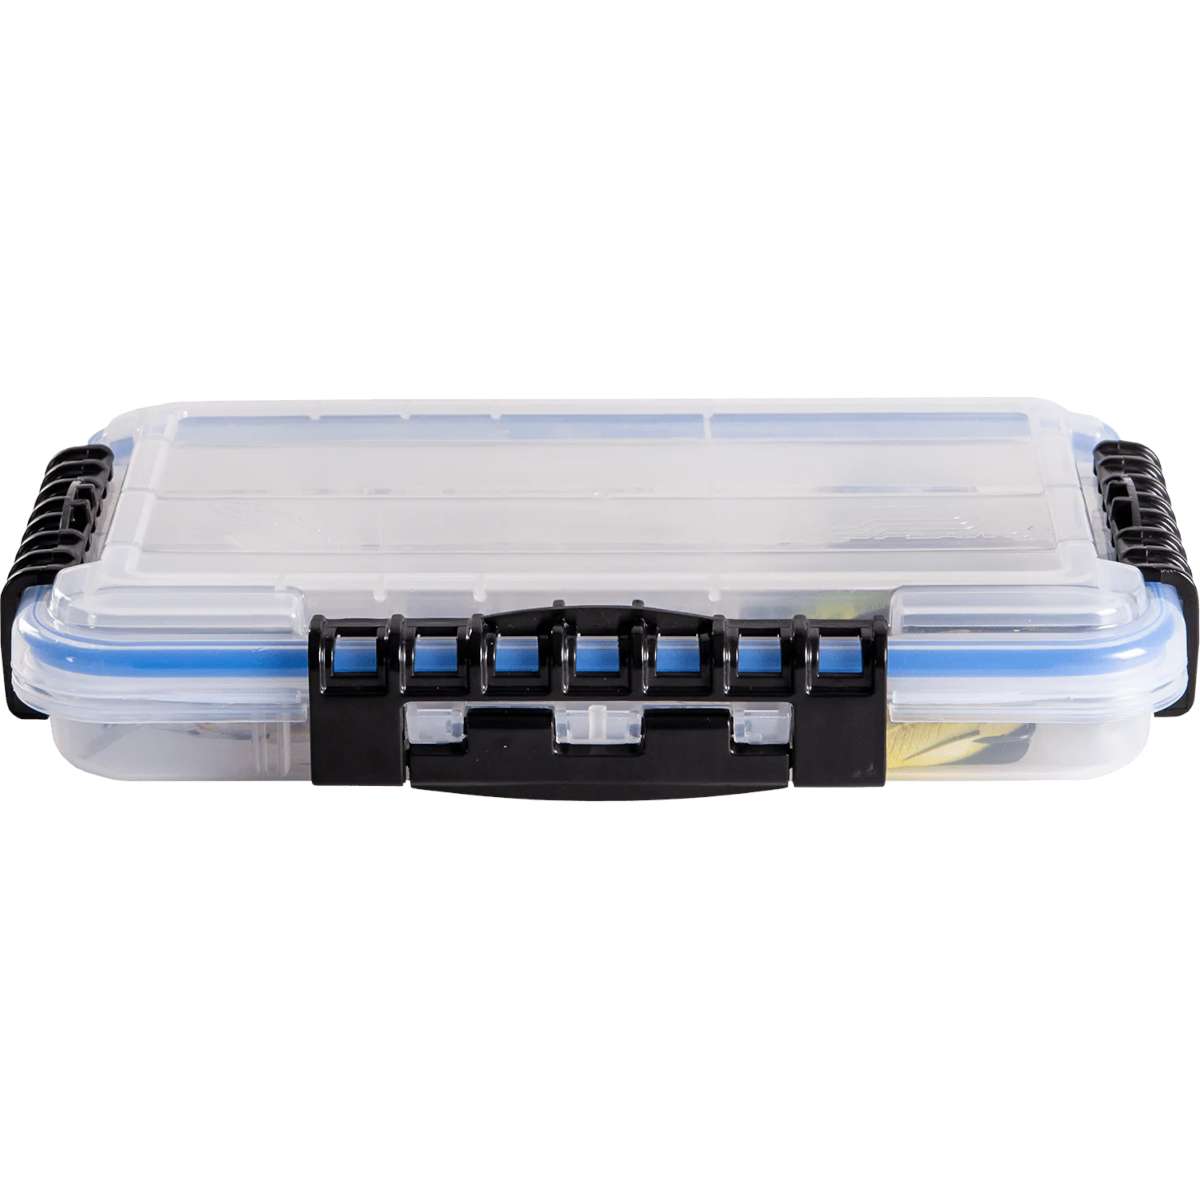 Plano 3640 Waterproof Tackle Storage Tray